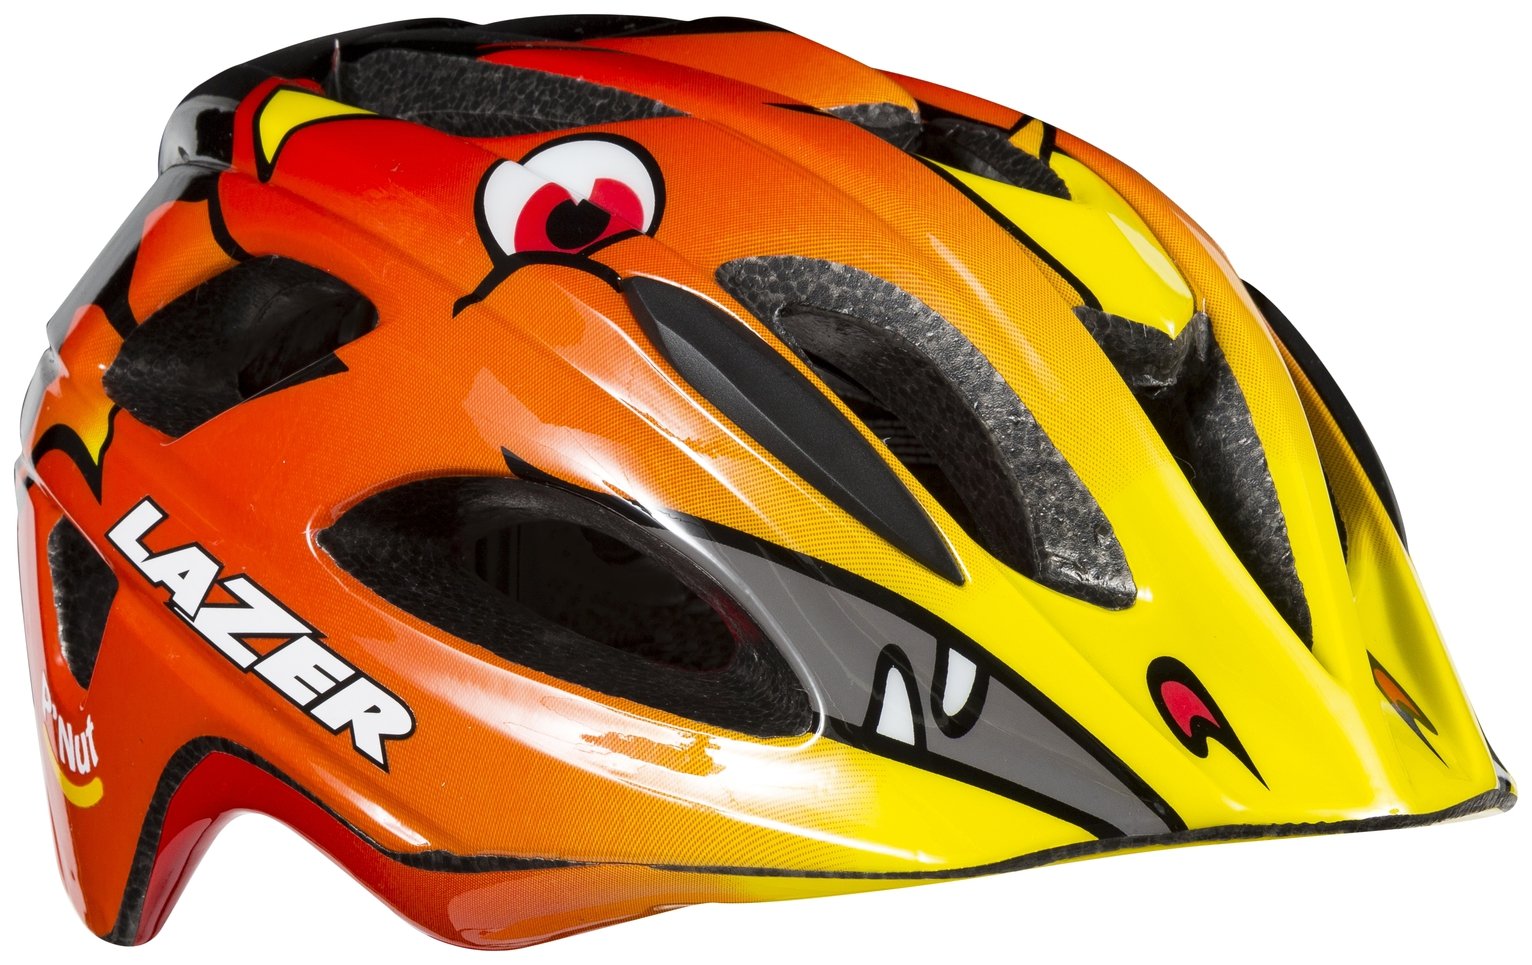 Lazer P Nut Kids Bike Helmet review